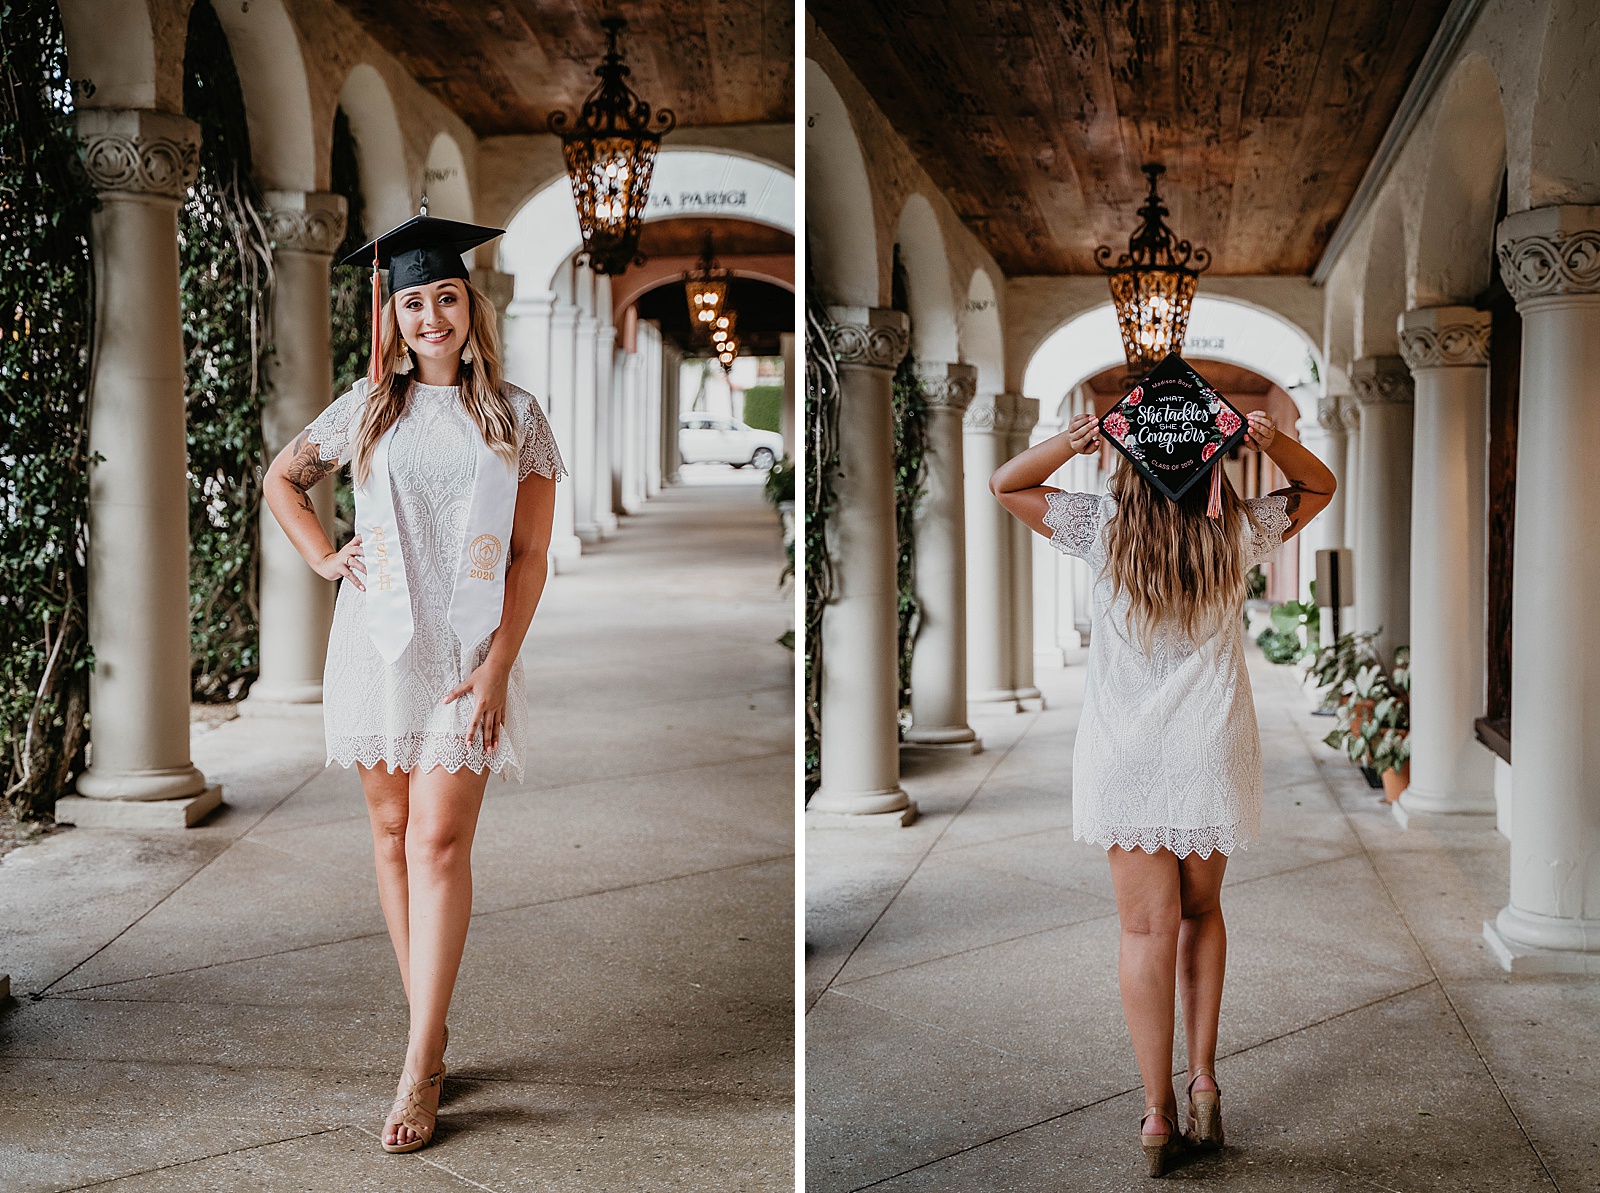 Worth Ave Graduation Photos captured by South Florida Portrait Photographer, Krystal Capone Photography